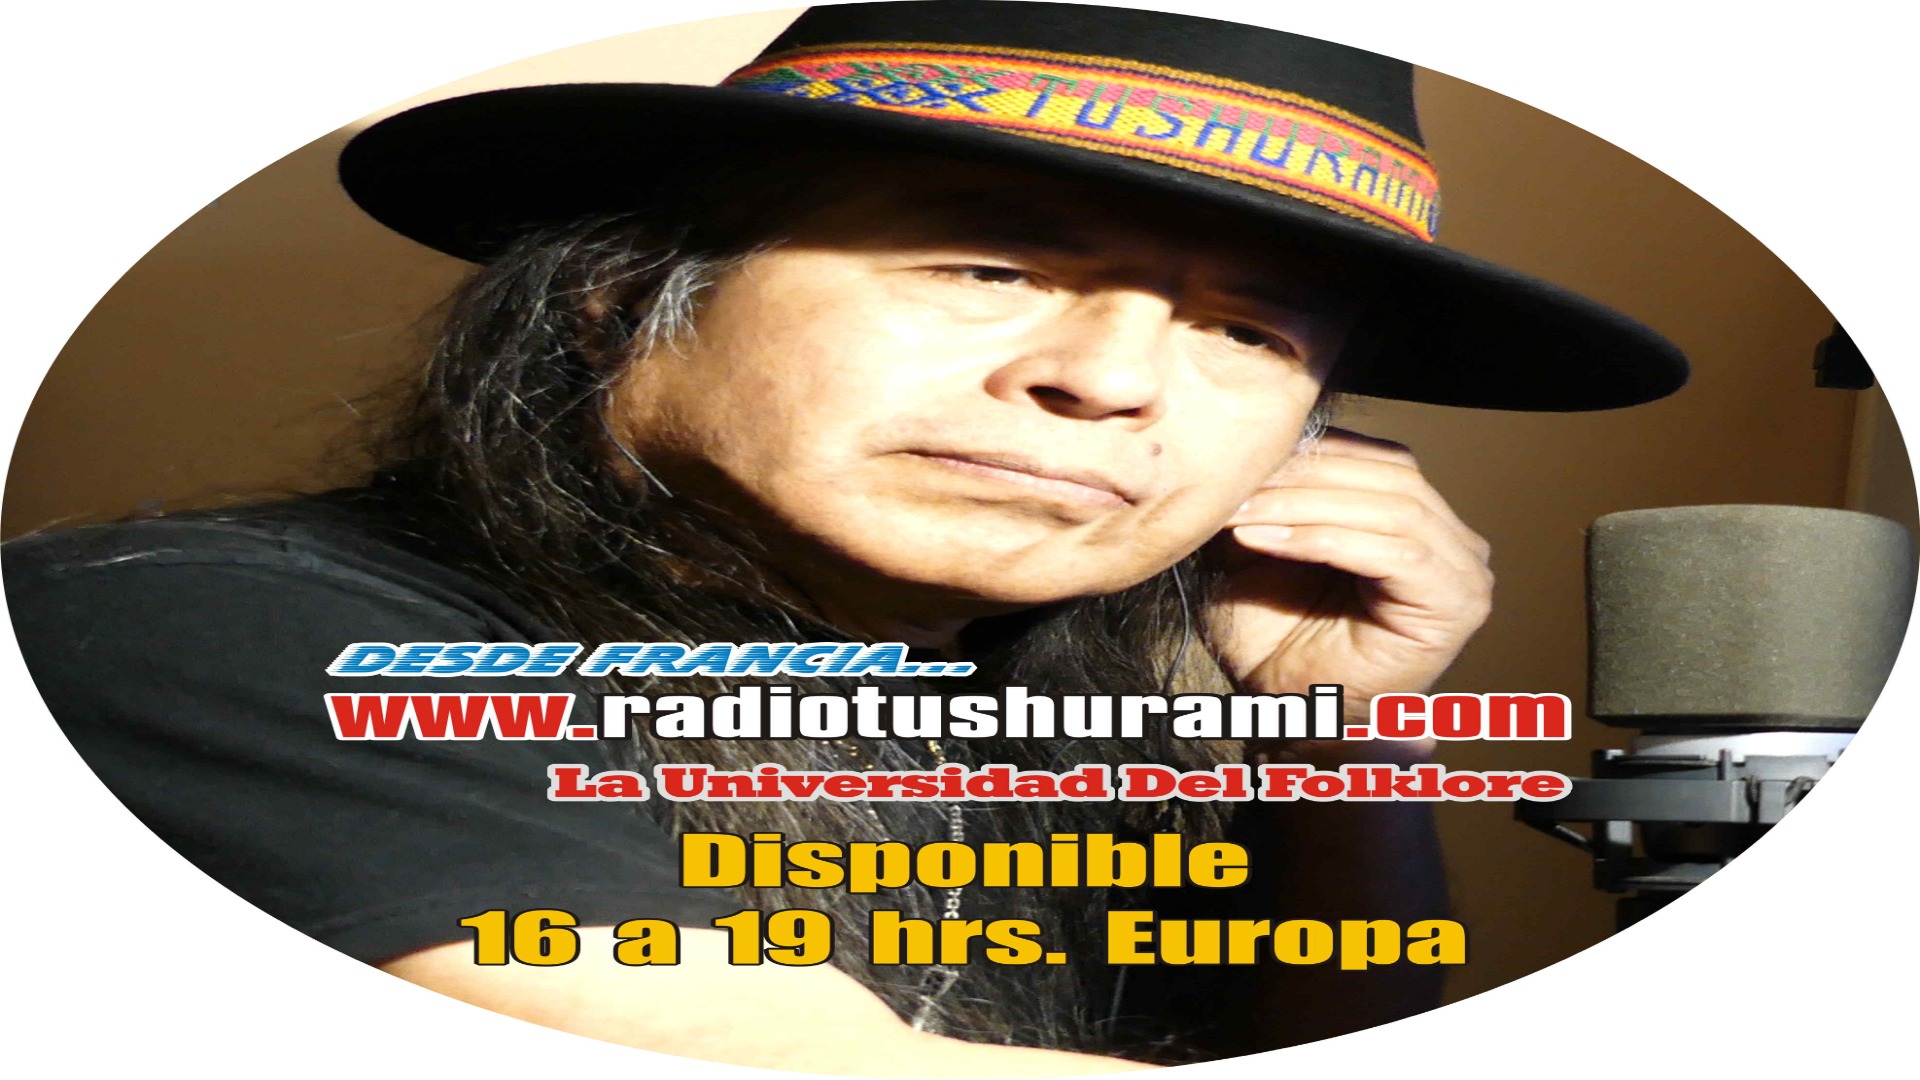 Иконка канала Radiotushurami